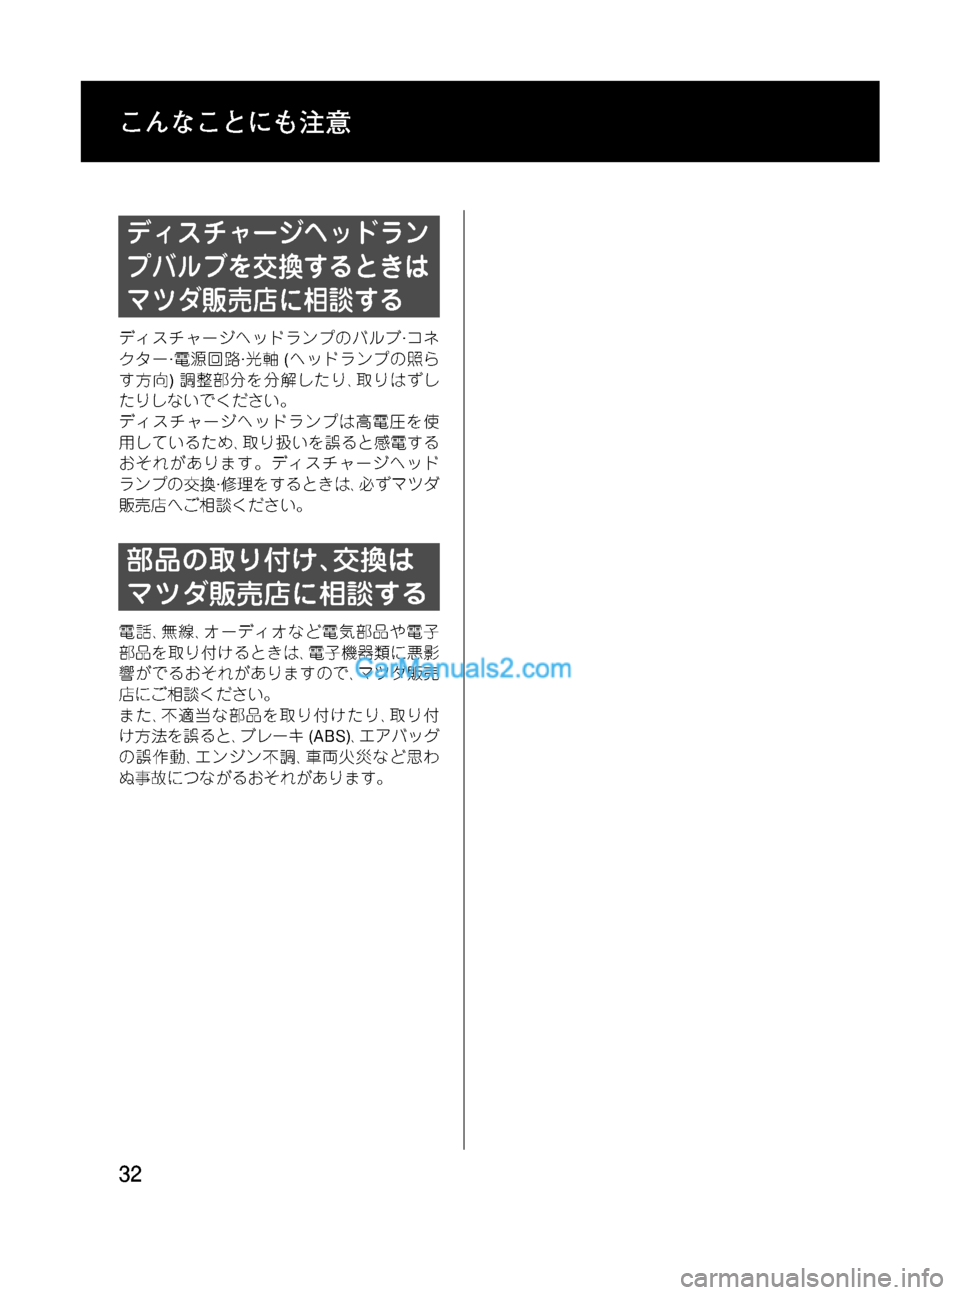 MAZDA MODEL VERISA 2007  ベリーサ｜取扱説明書 (in Japanese) Black plate (32,1)
ディスチャージヘッドラン
プバルブを交換するときは
マツダ販売店に相談する
ディスチャージヘッドランプのバルブ·コネ
クター·�